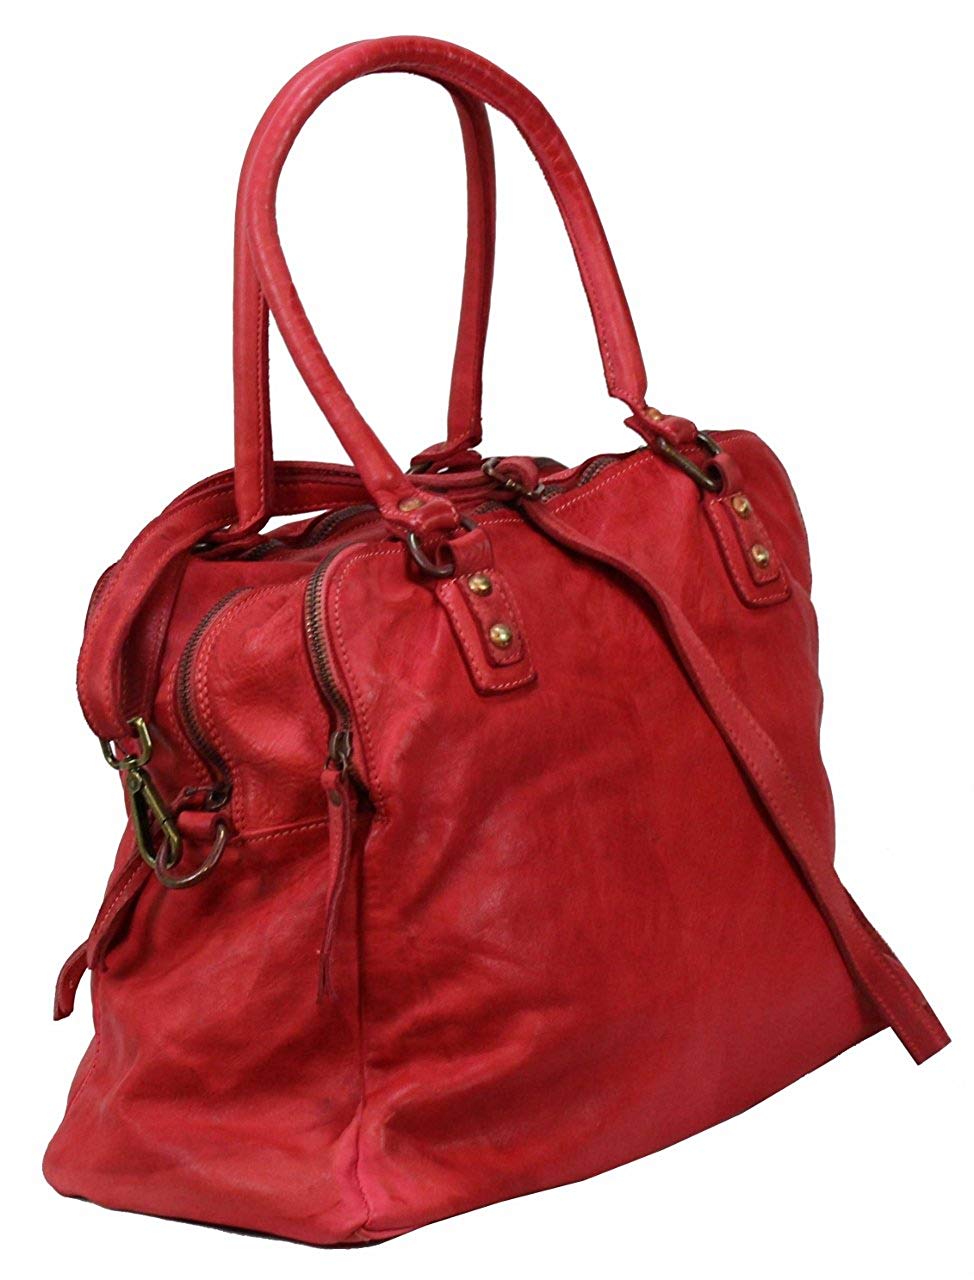 BOZANA Bag Lue rosso Italy Designer Messenger Damen Handtasche Schultertasche Tasche Leder Shopper Neu